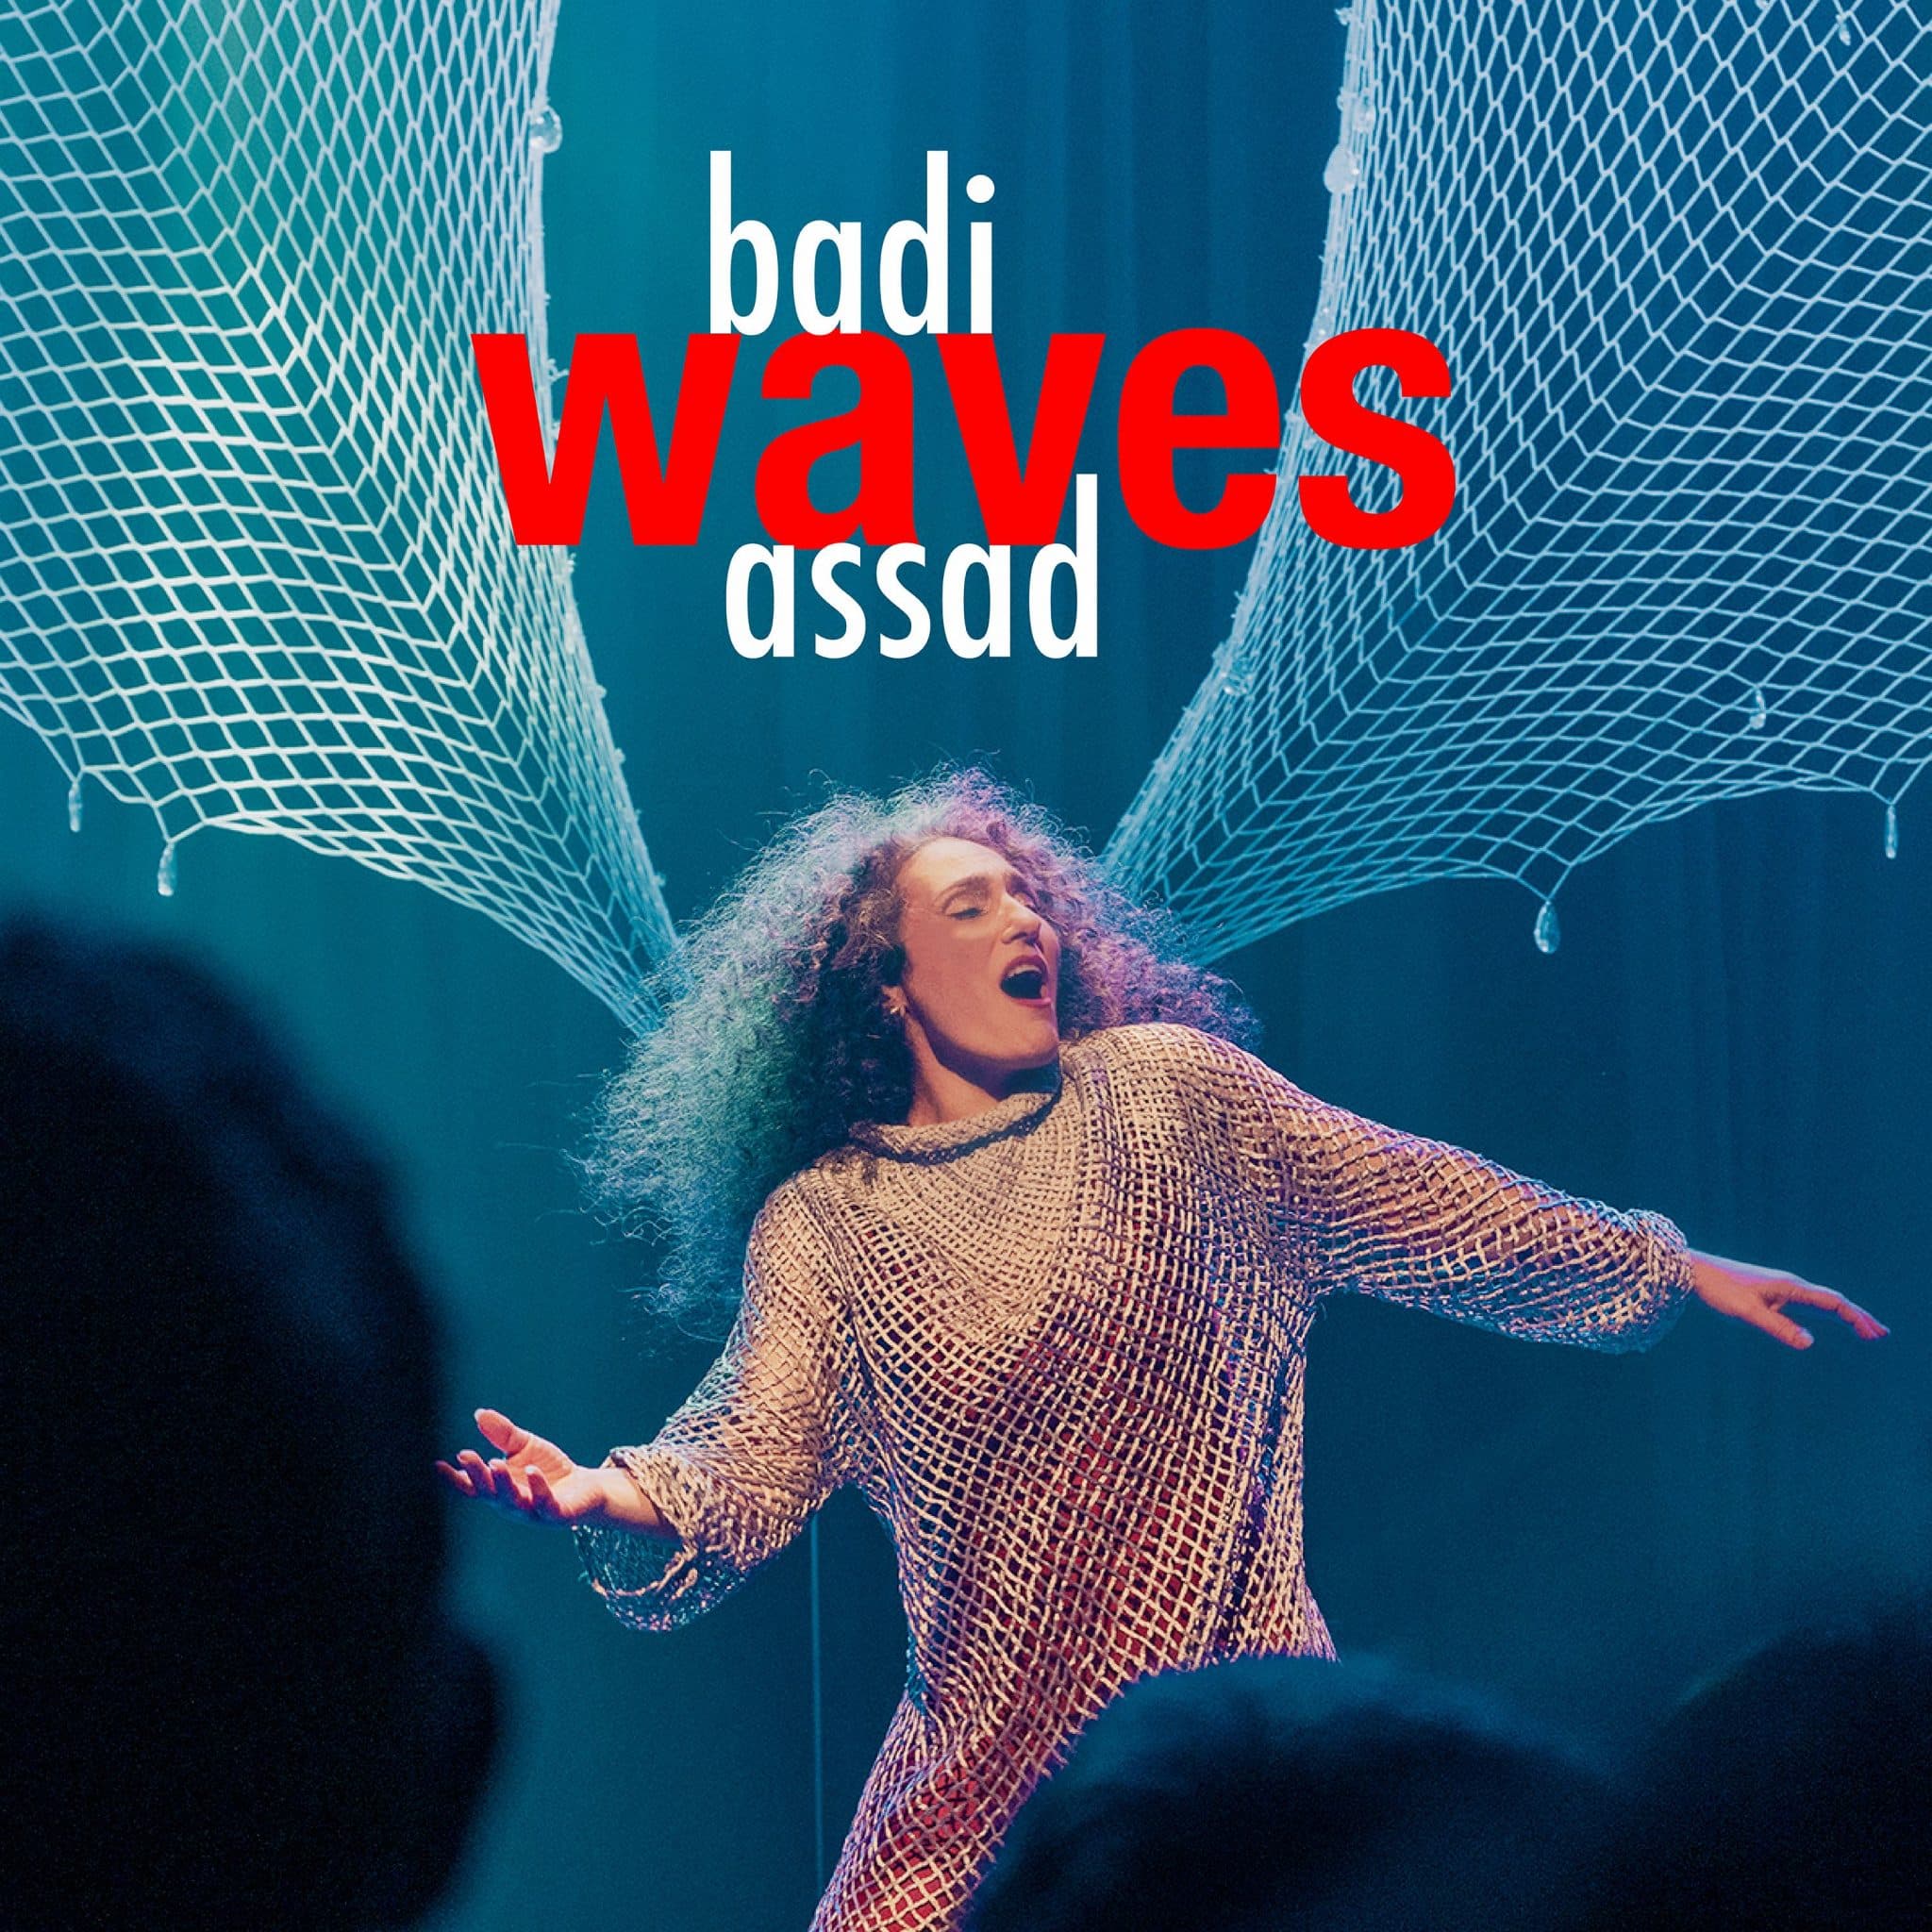 revistaprosaversoearte.com - Badi Assad lança single ' Waves'